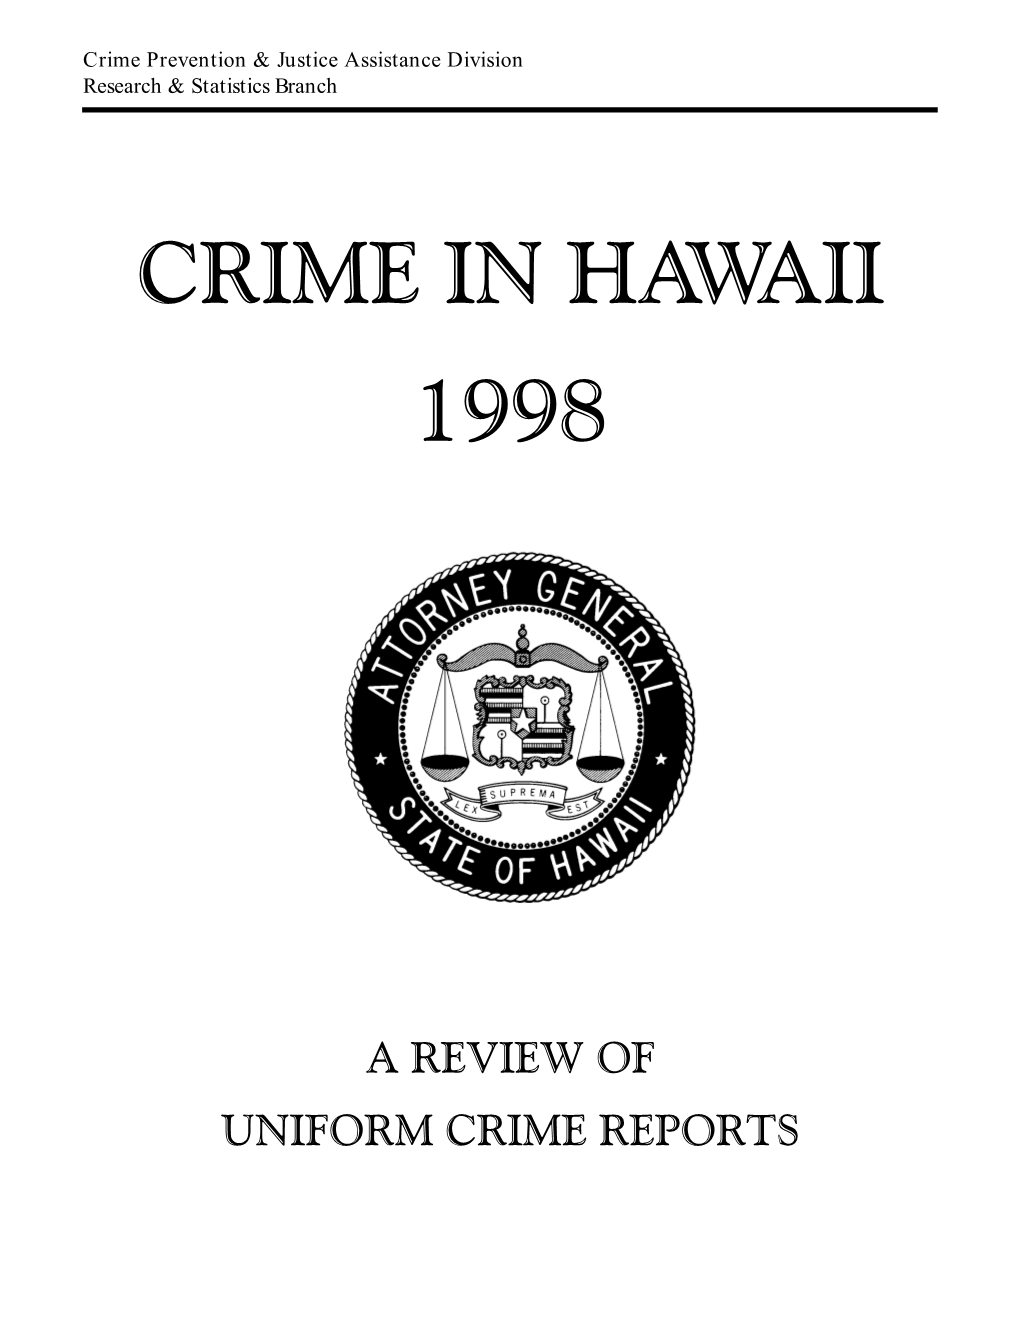 Crime in Hawaii 1998